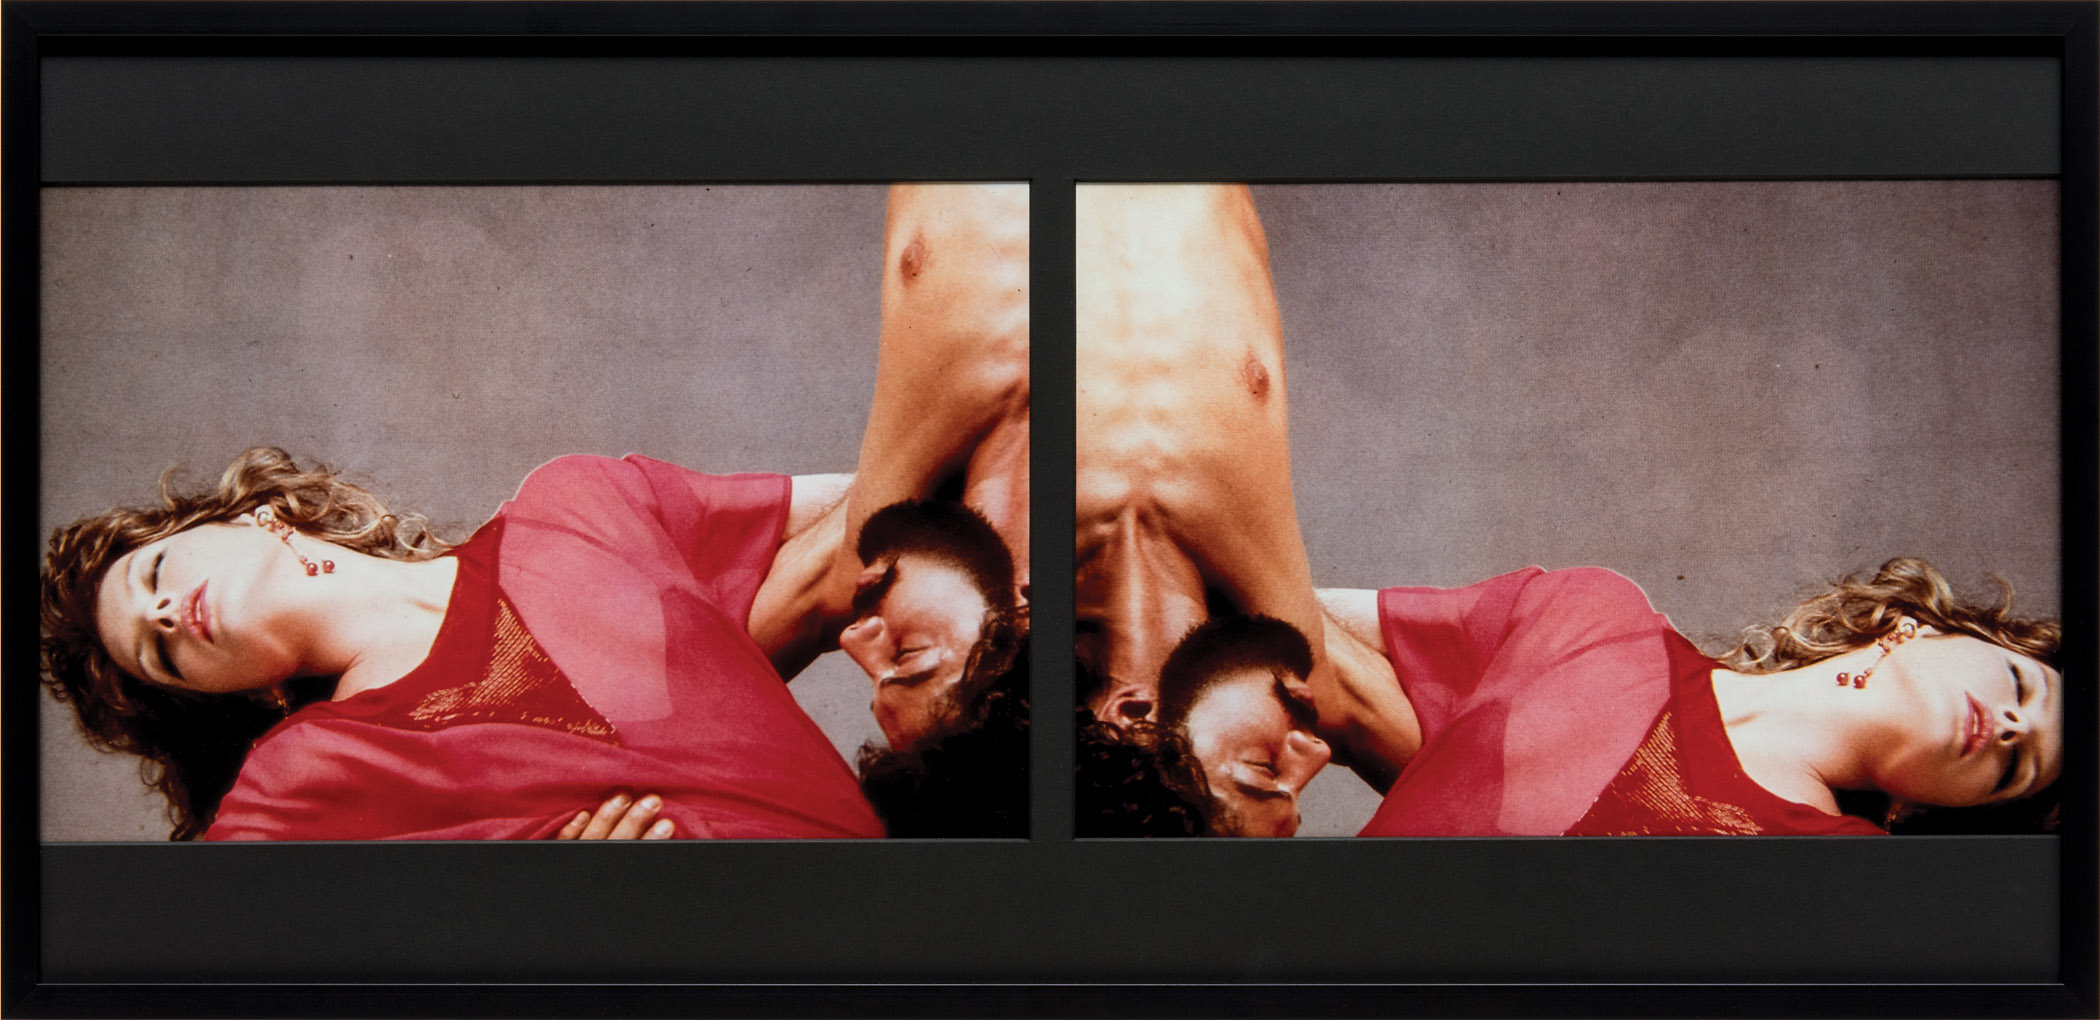     Vikky Alexander, Decent, 1982, Cibachrome, 12”x24”, Courtesy of Vikky Alexander and COOPER COLE, Toronto

